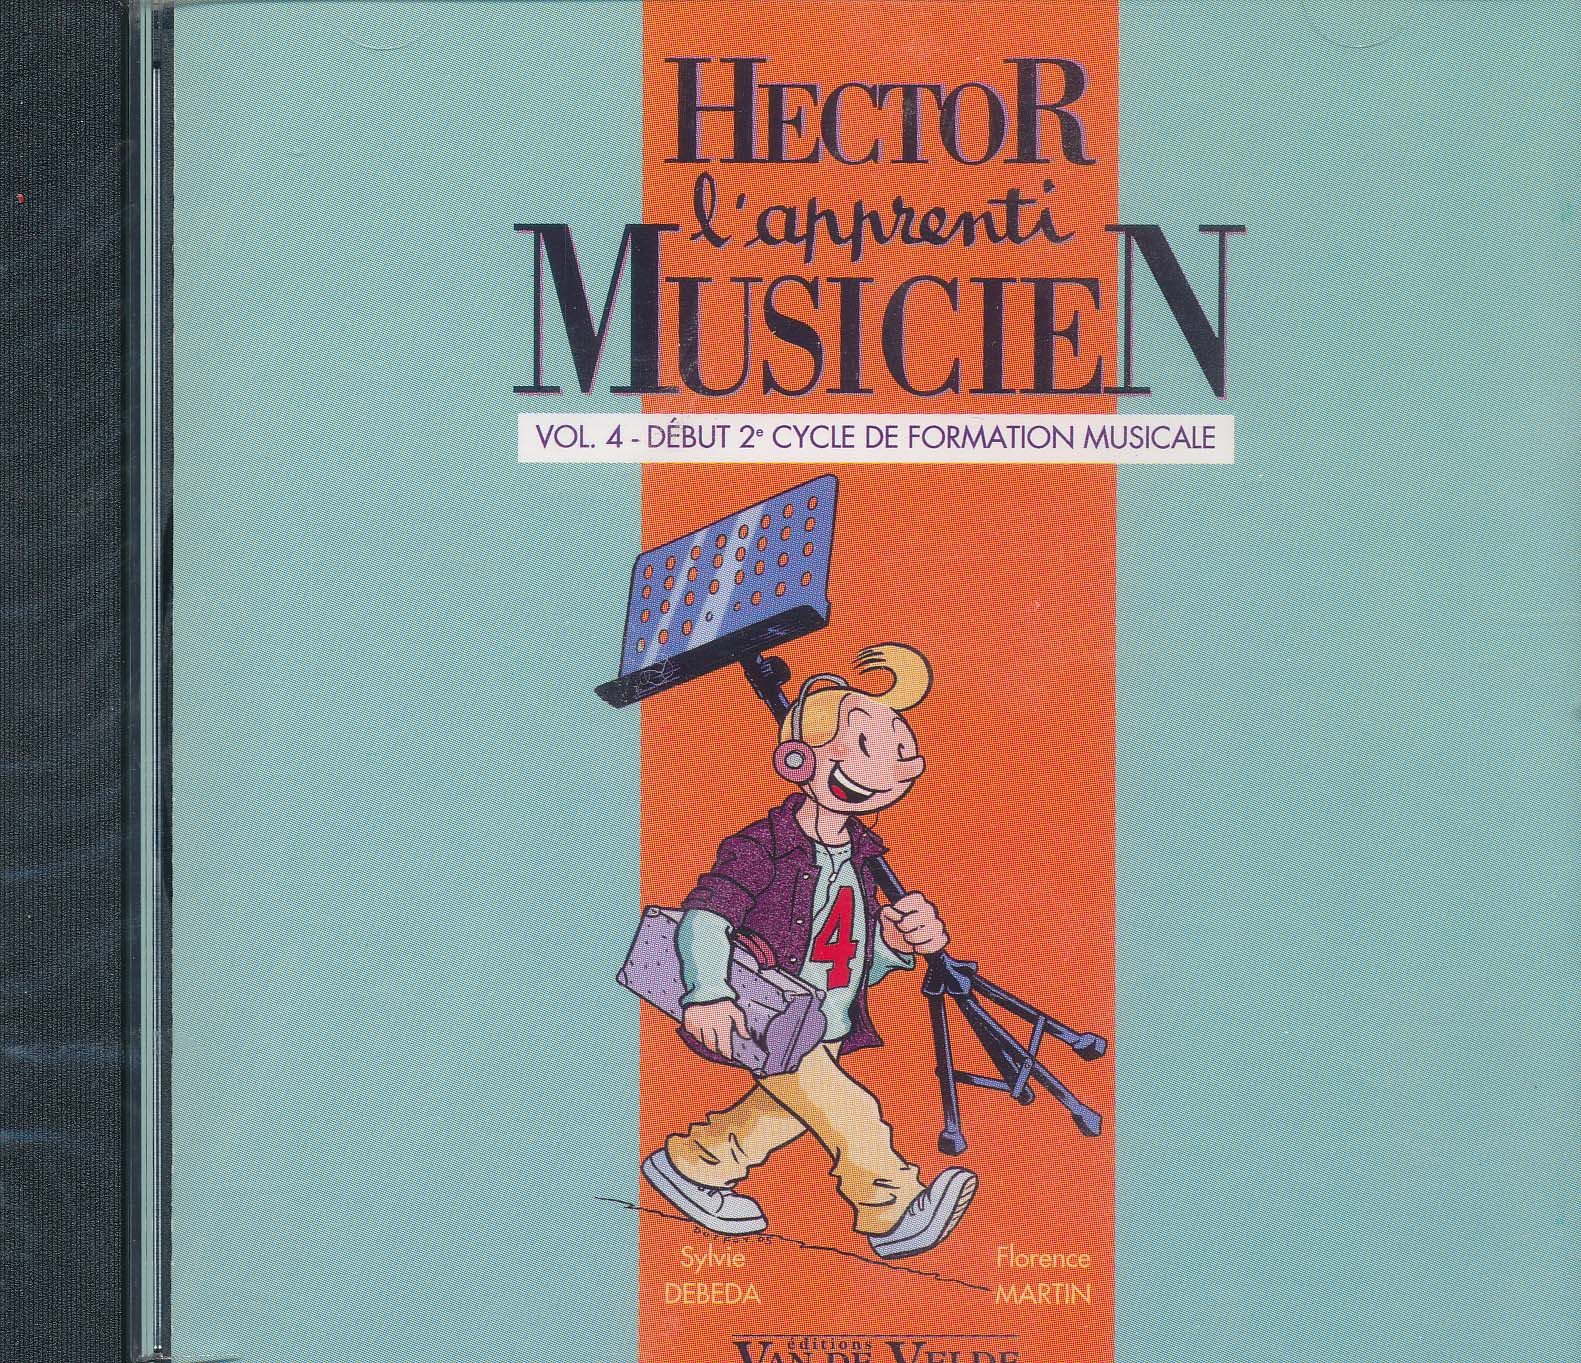 Dbda, Sylvie / Martin, Florence : CD Audio : Hector, l'Apprenti Musicien - Volume 4